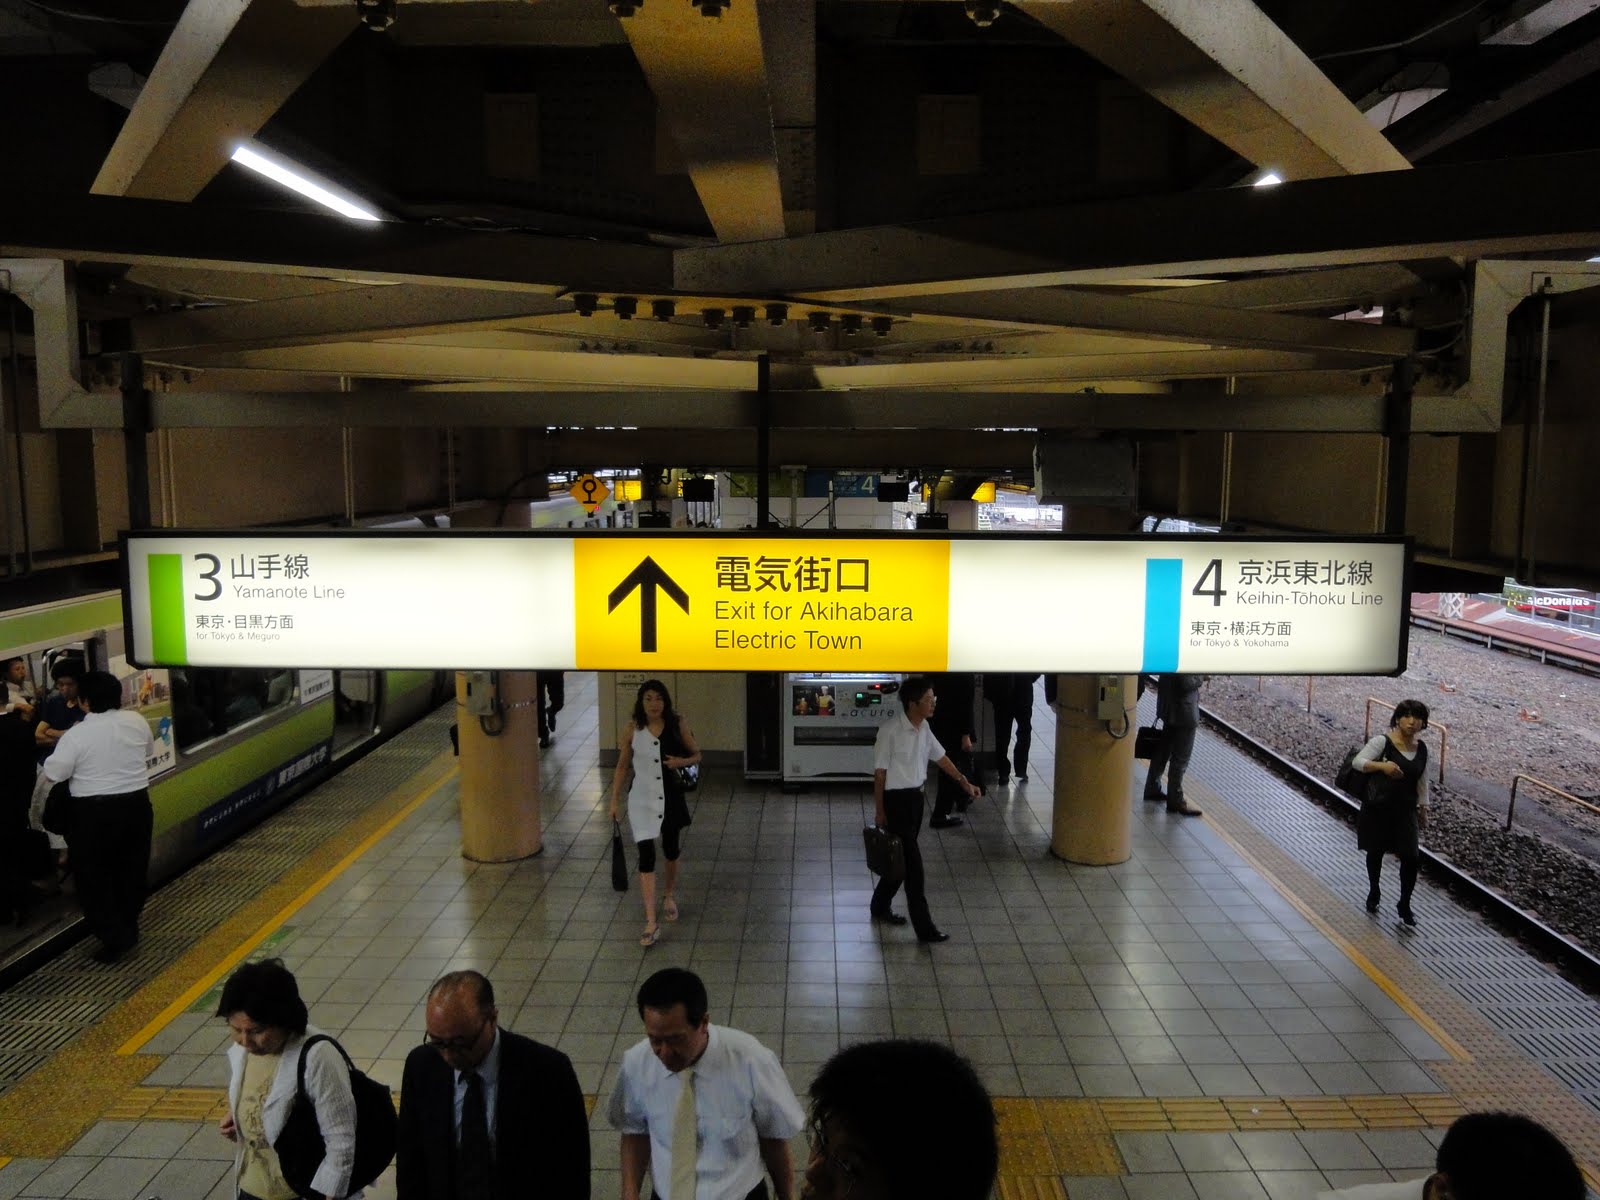 Travel Journal: How to Reach Akihabara